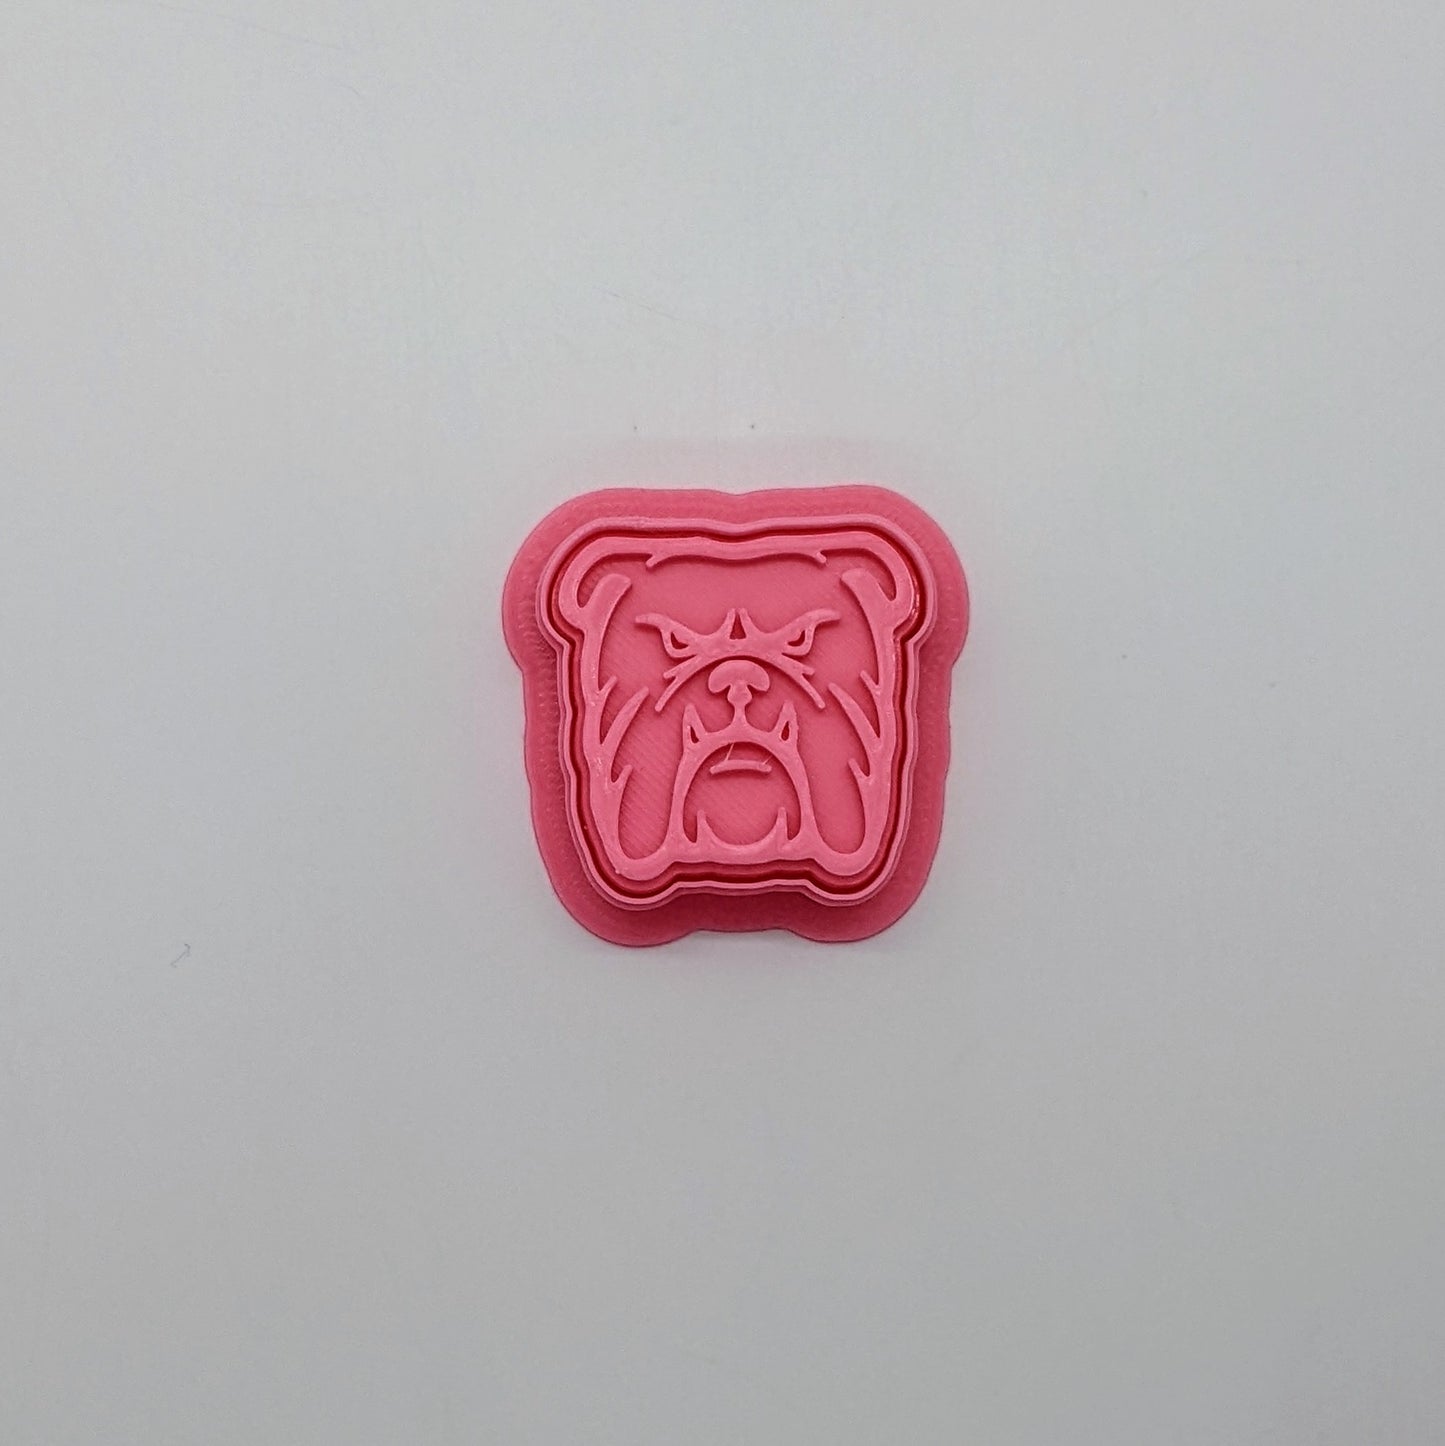 MSU Bulldog Stamp & Cutter Set for Cookies, Ceramics, Pottery, Polymer Clay, Fondant - Multi-Medium Craft & Baking Tool